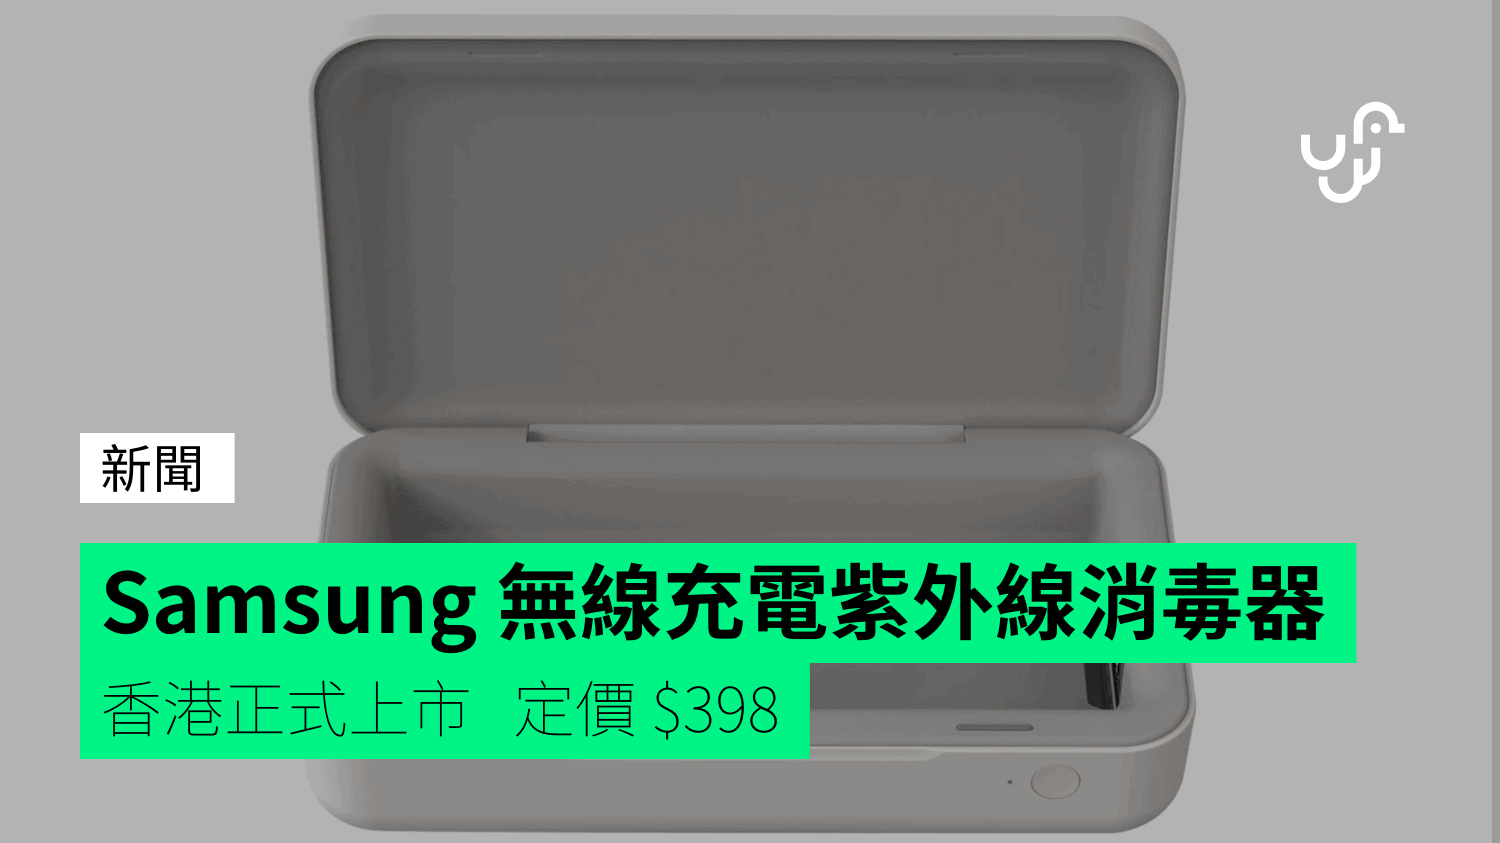 Samsung 無線充電紫外線消毒器香港正式上市定價$398 - 香港unwire.hk